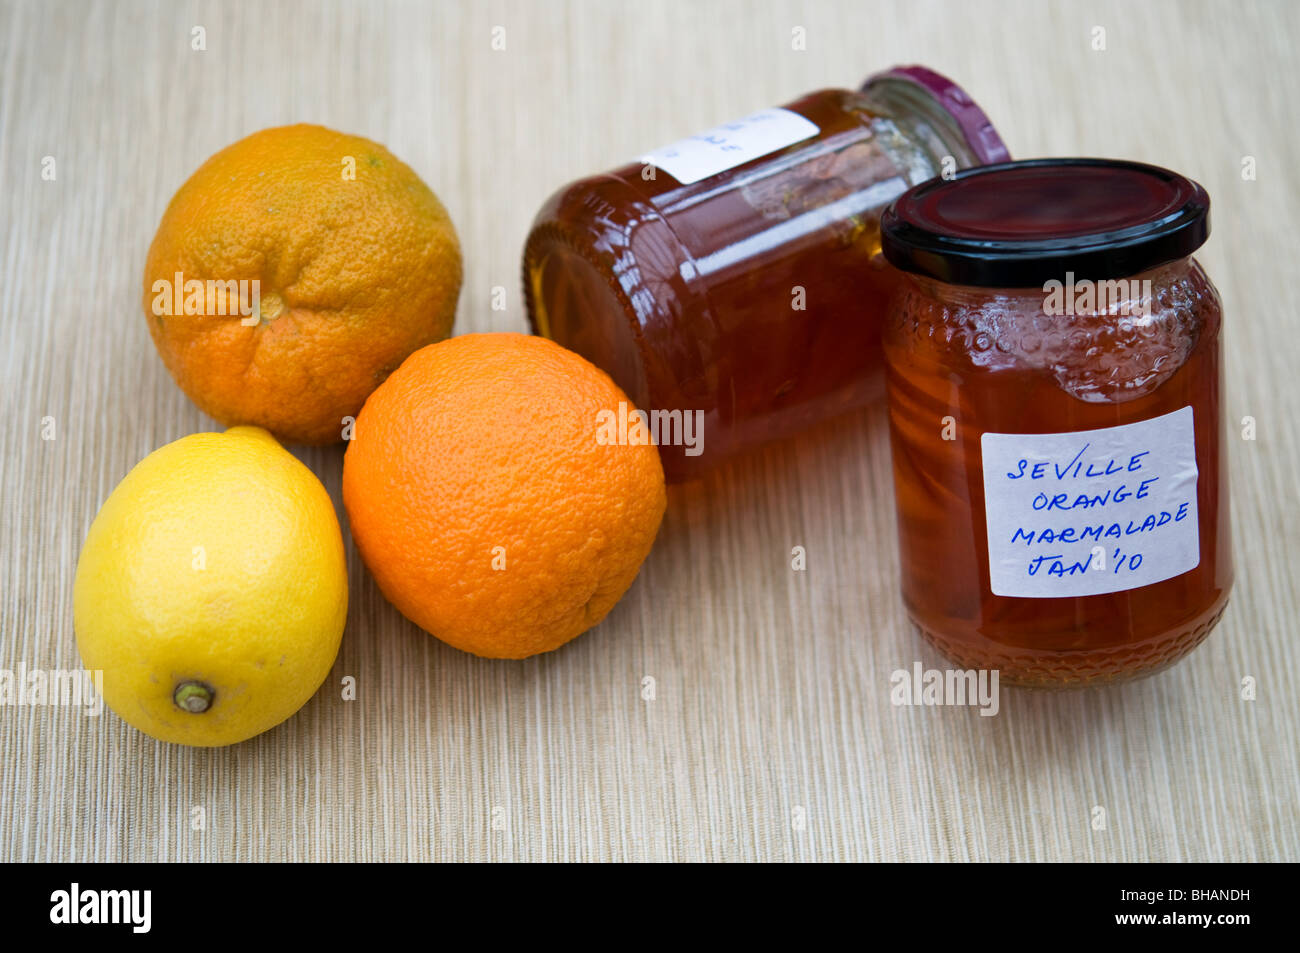 Seville orange marmalade Stock Photo